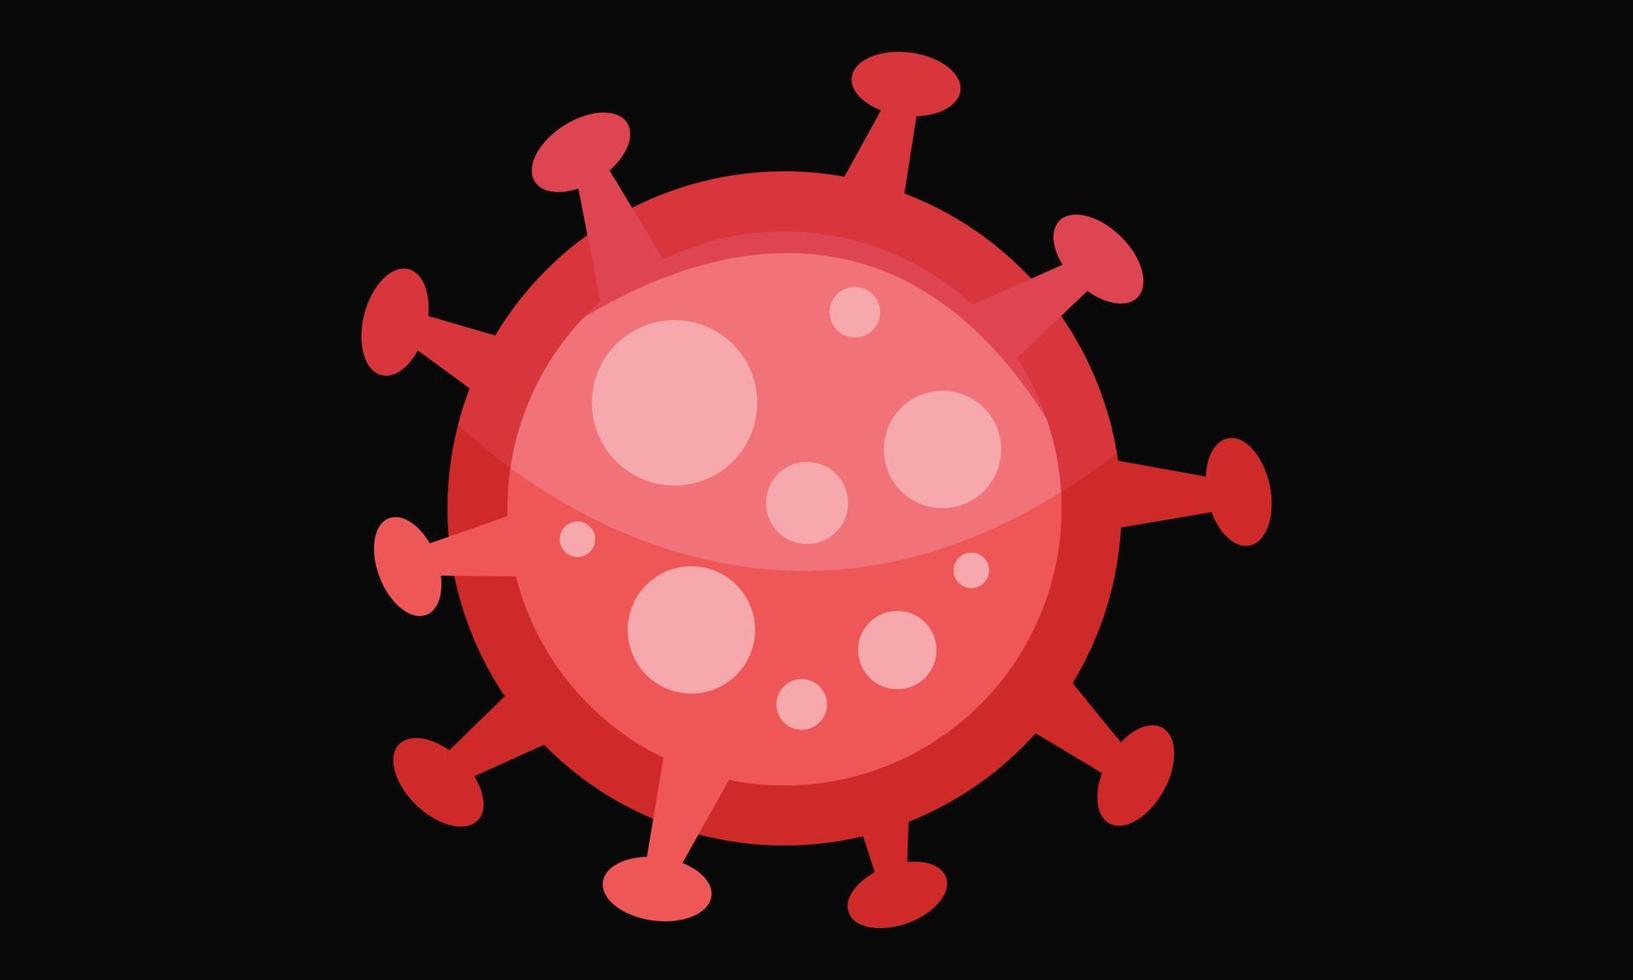 vektor corona virus, covid-19 ikon, pandemi virus på svart bakgrund